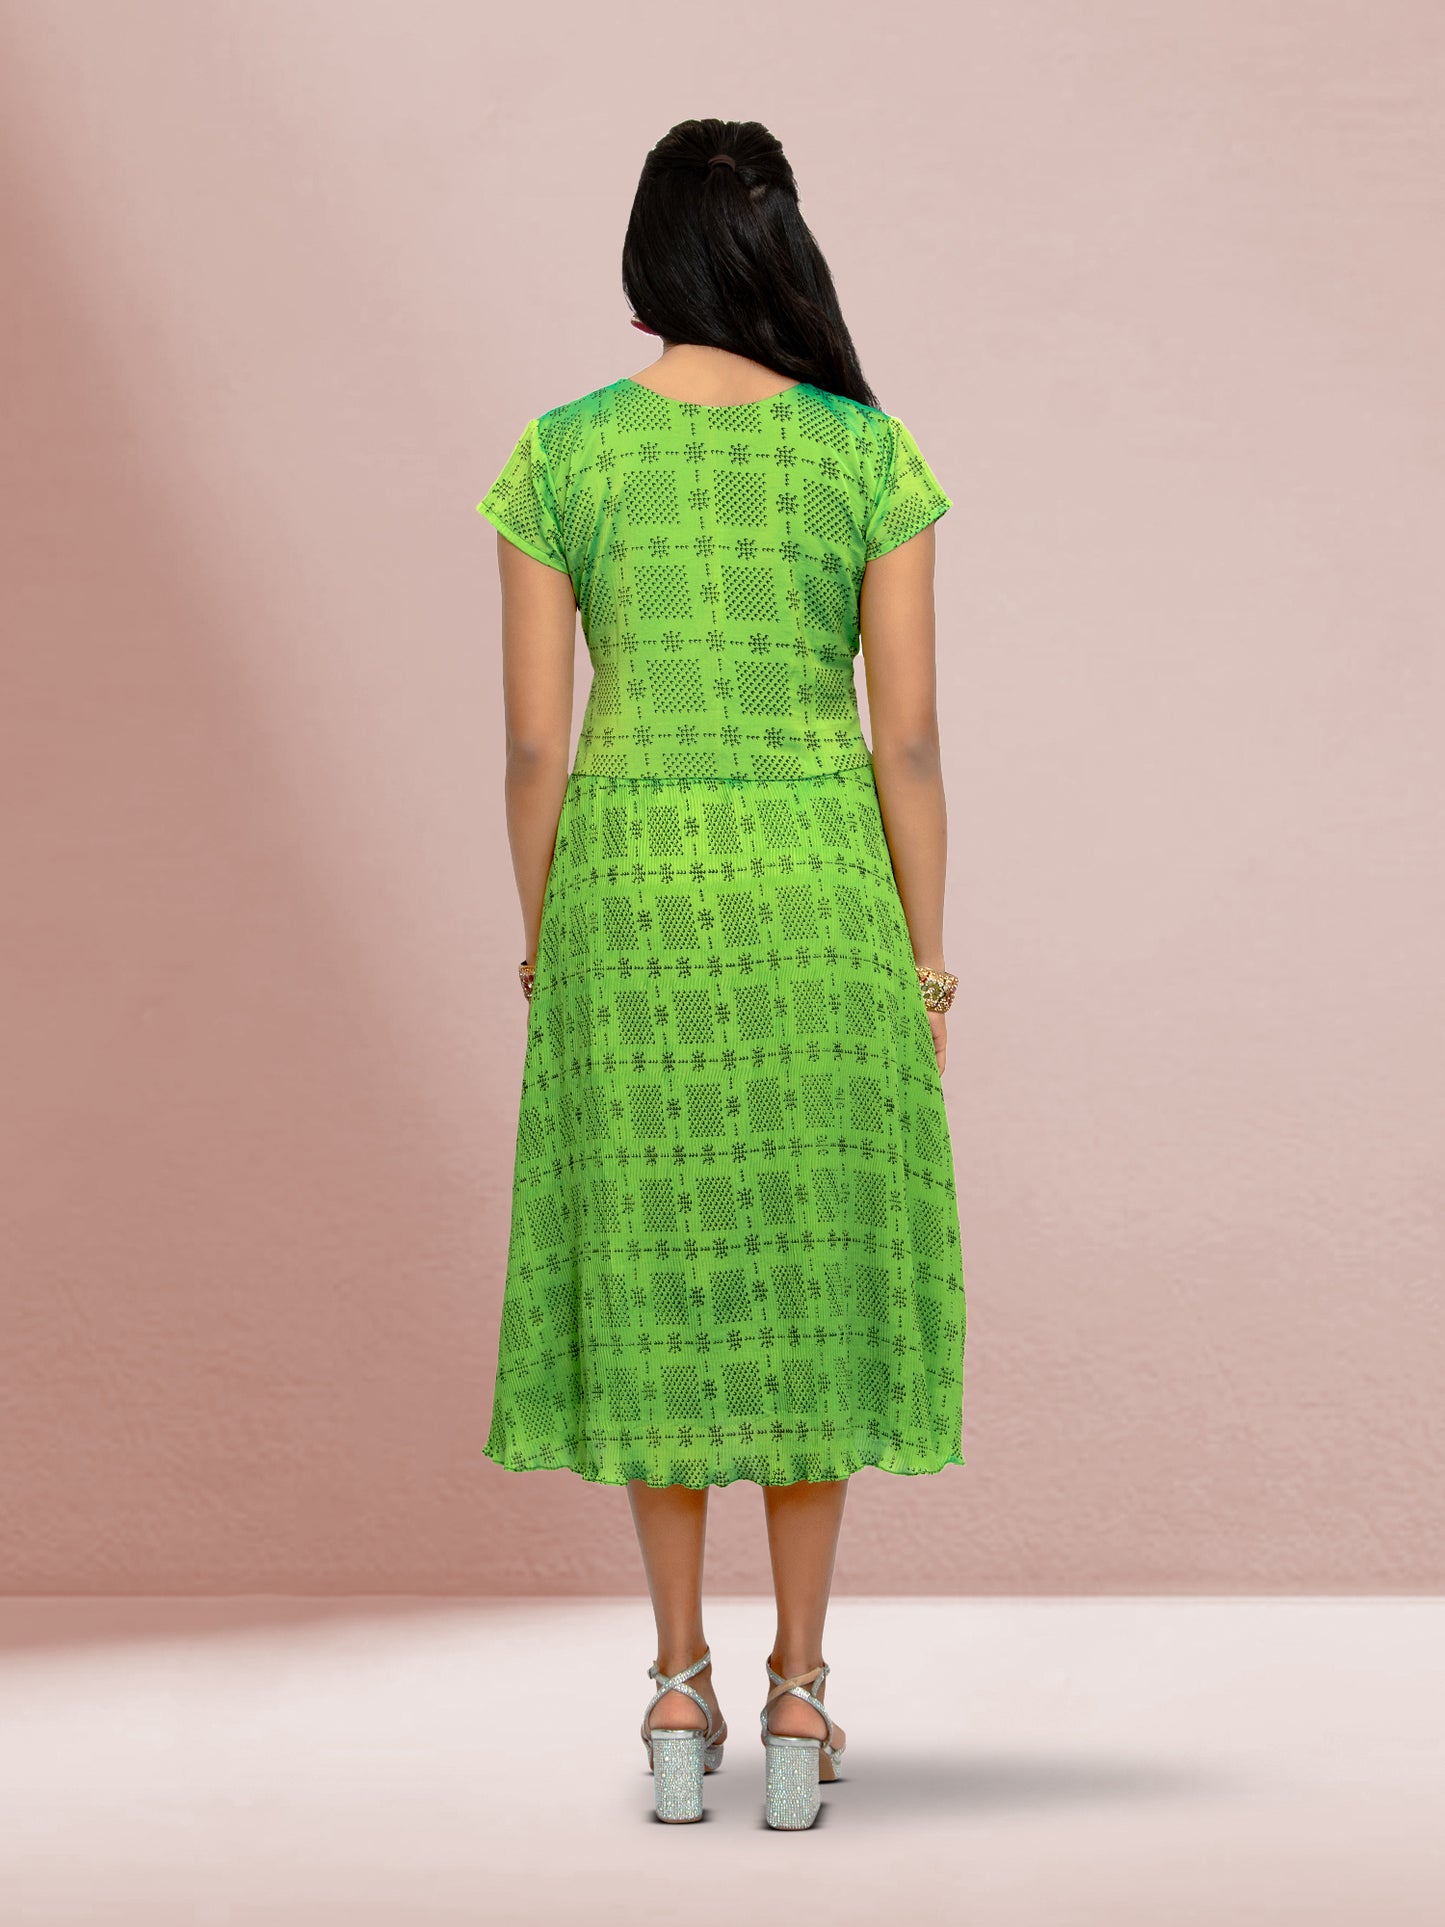 Harmony Hues - Parrot Green Crushed Dress